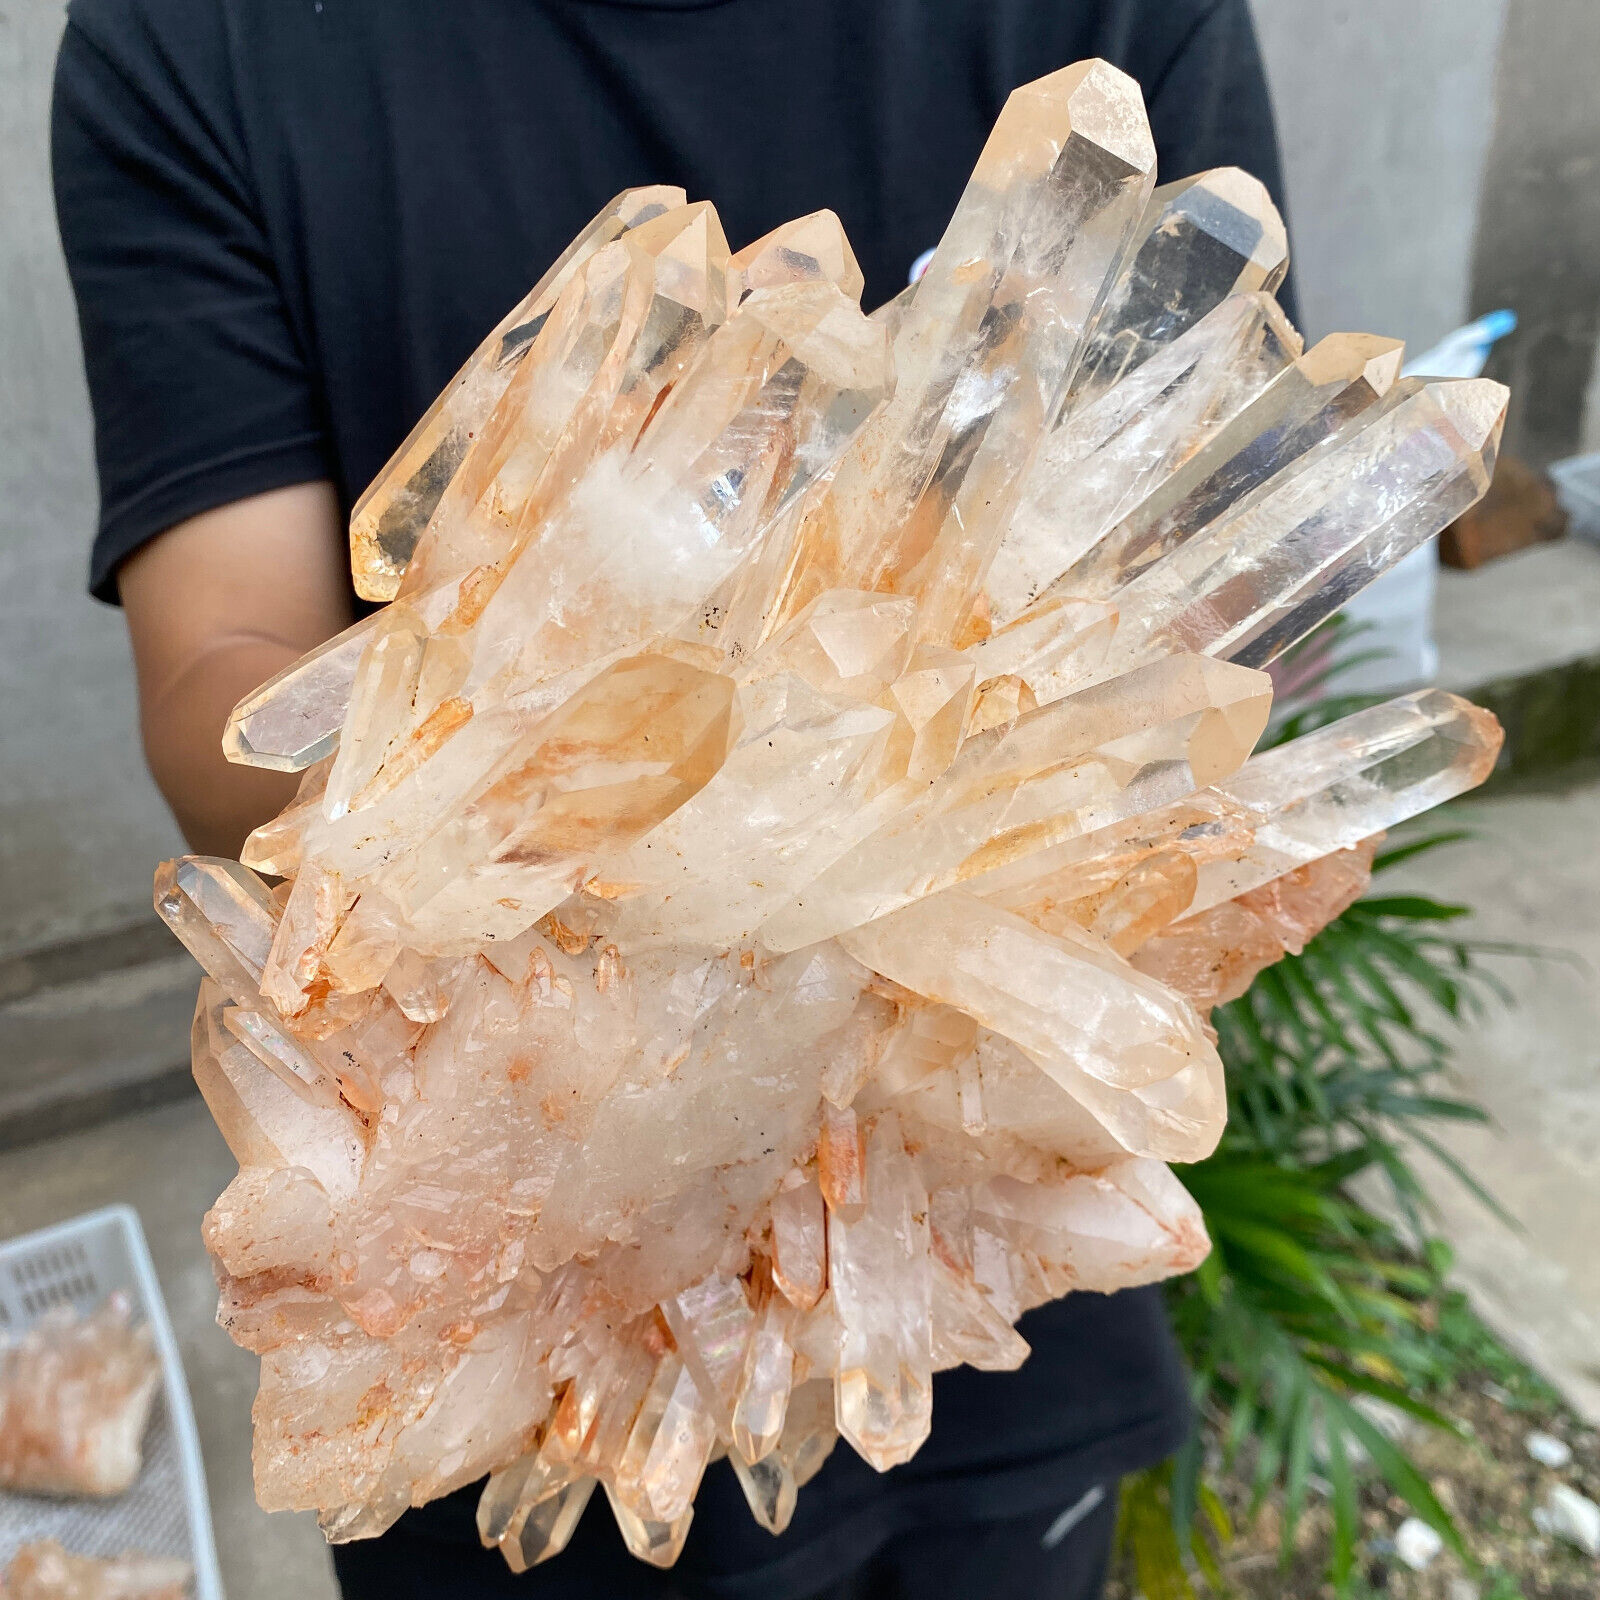 9lb Large Natural Clear White Quartz Crystal Cluster Rough Healing Specimen